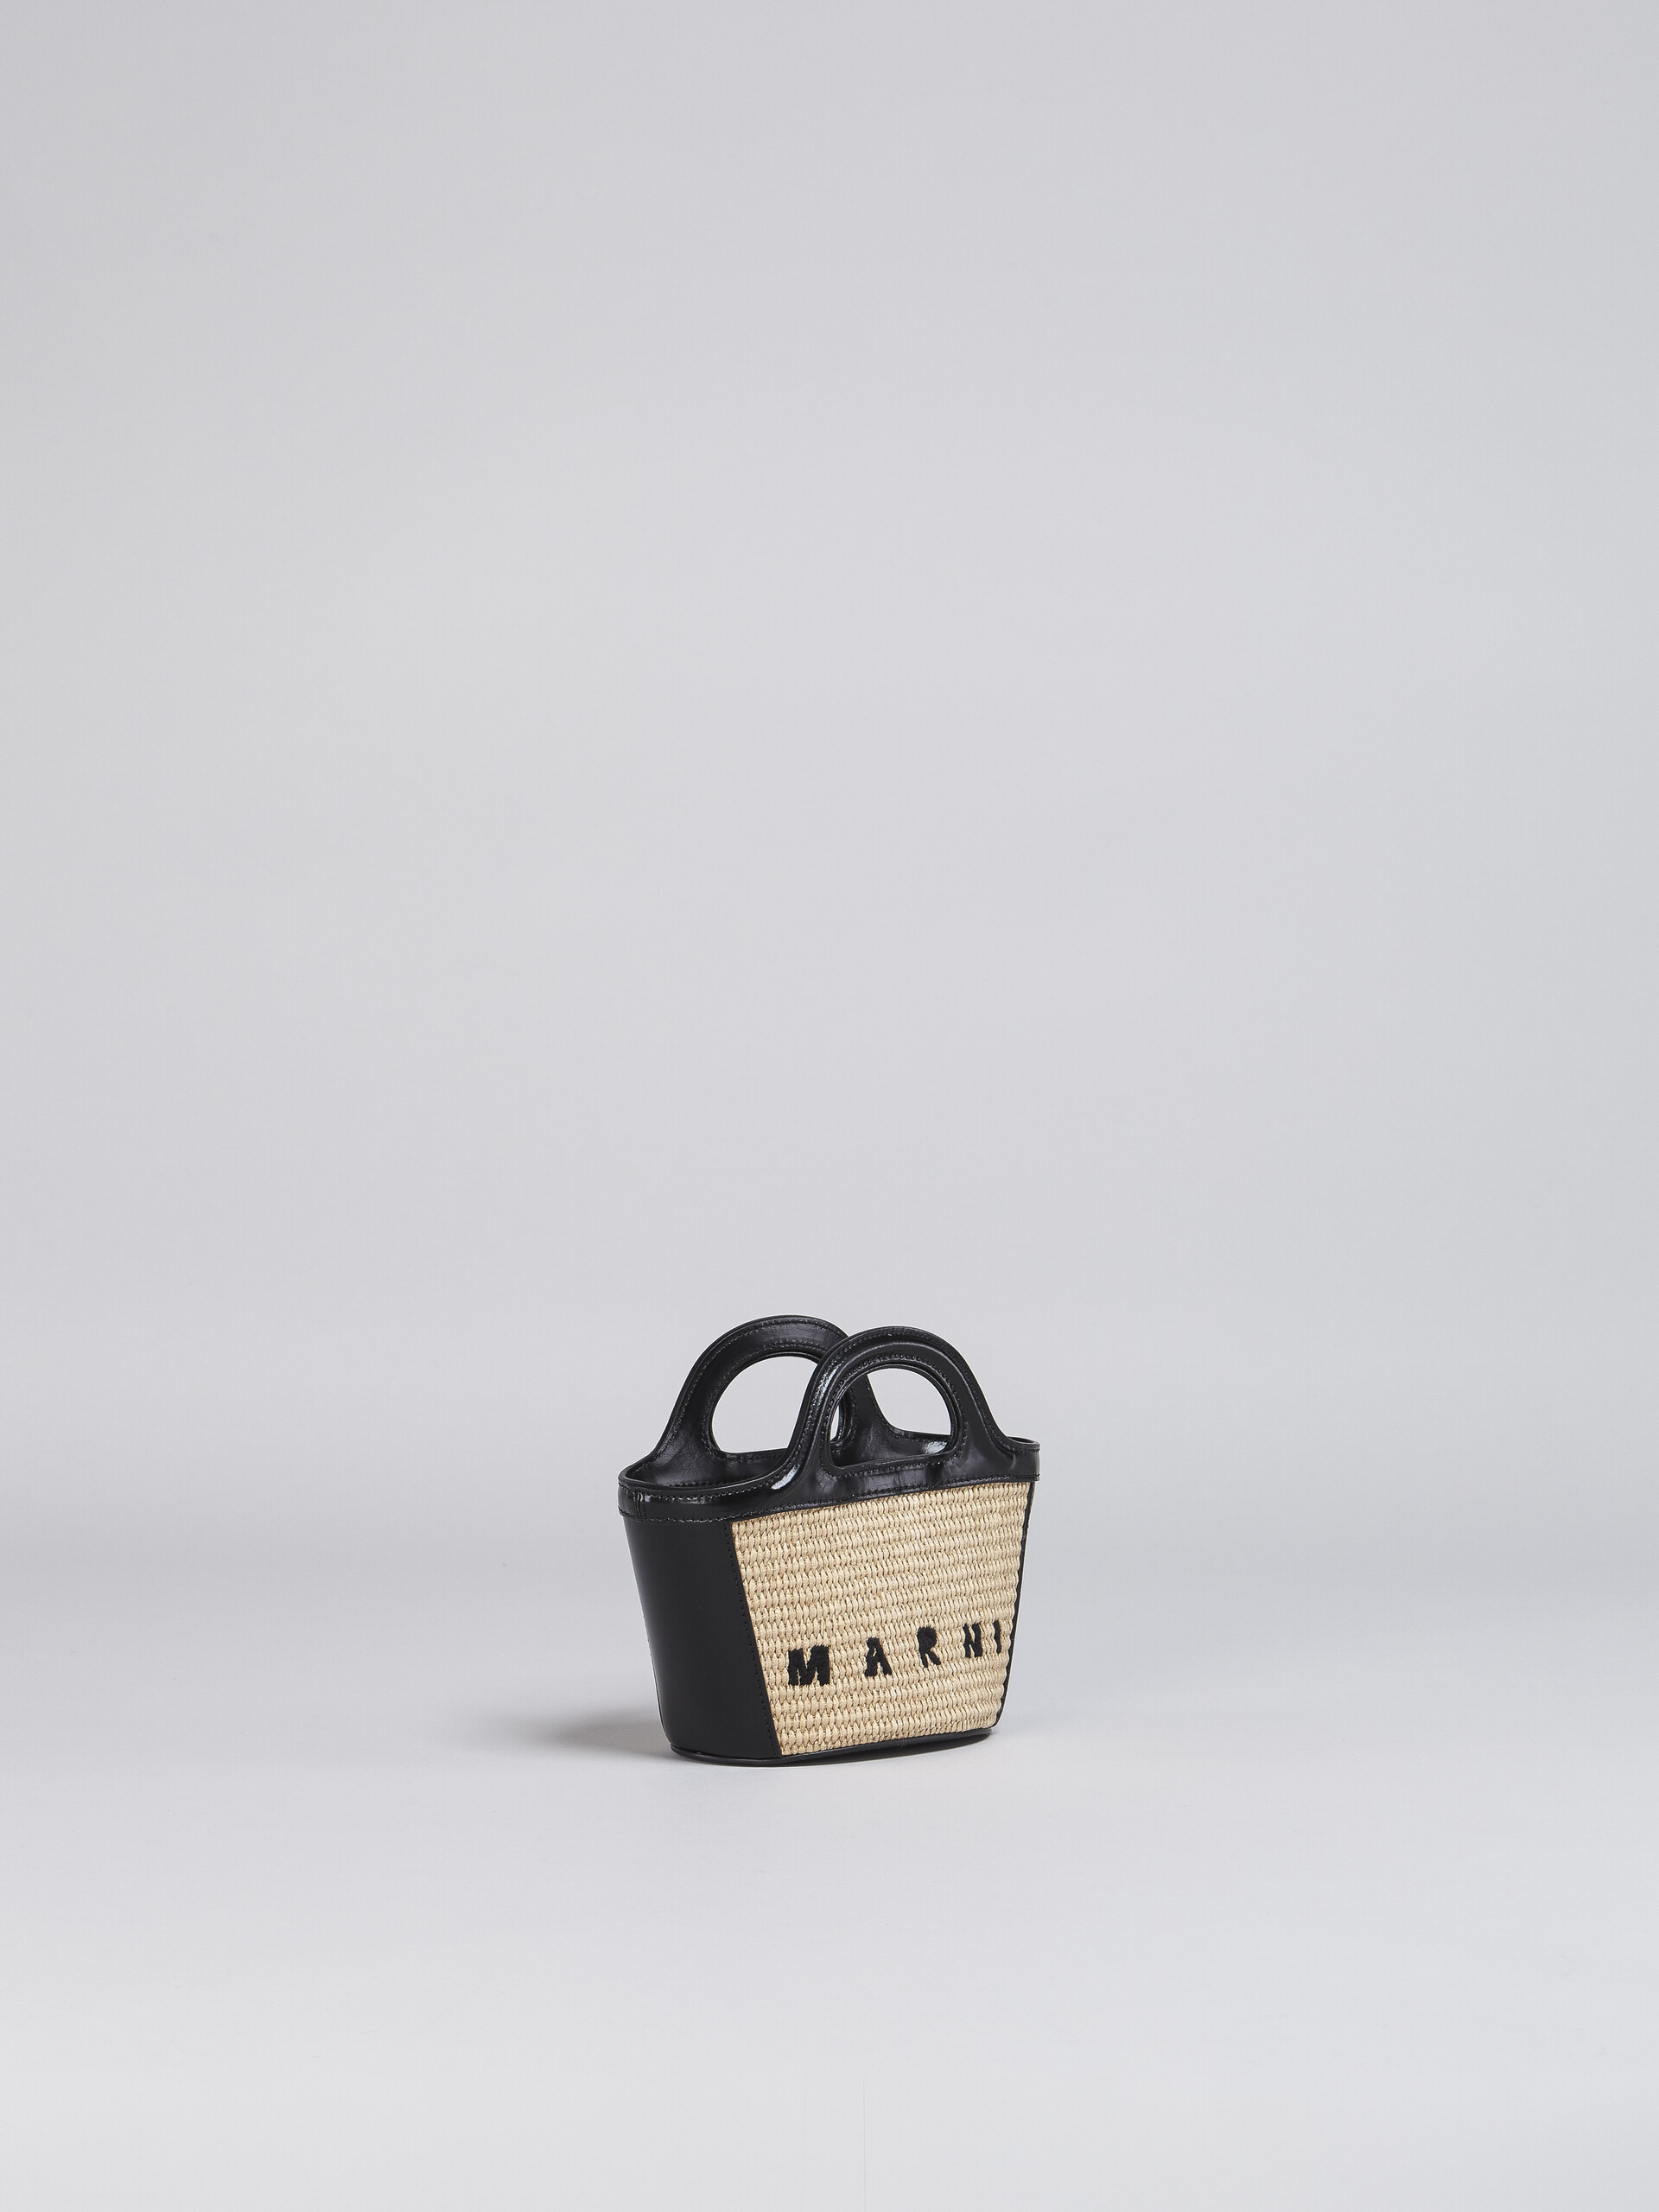 Black leather and raffia micro TROPICALIA SUMMER bag - Handbag - Image 6